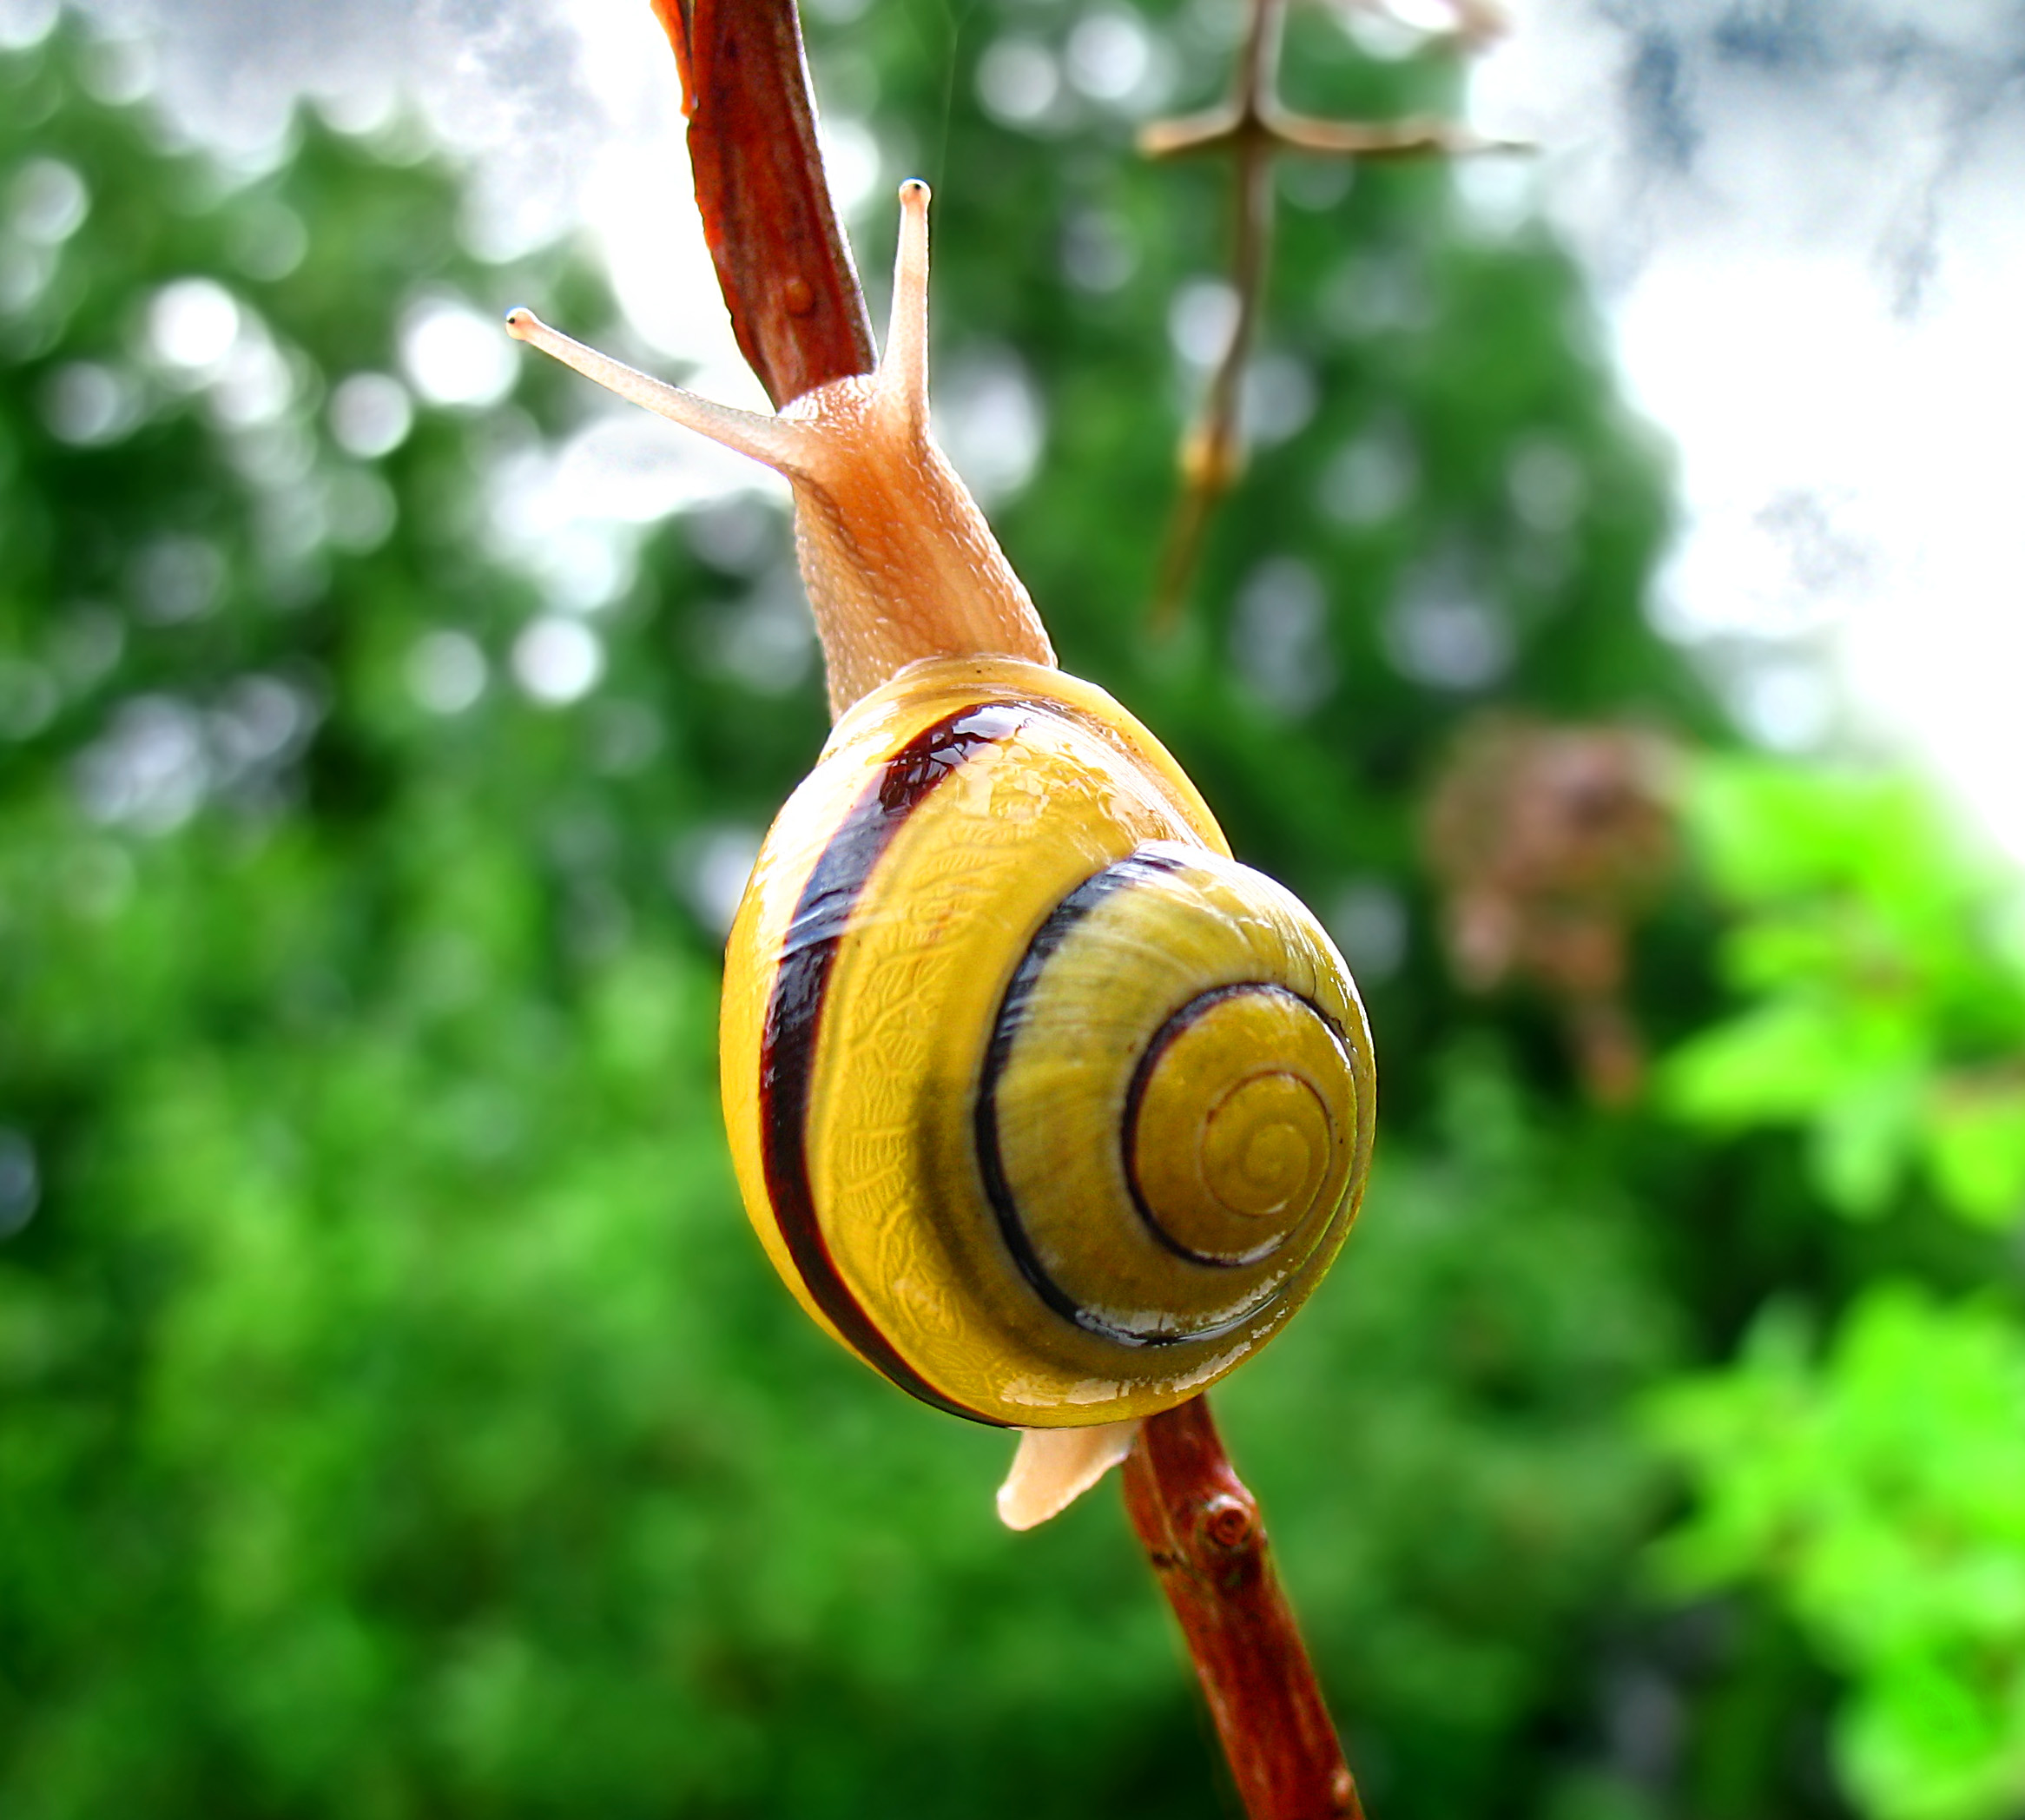 photo of a snail.